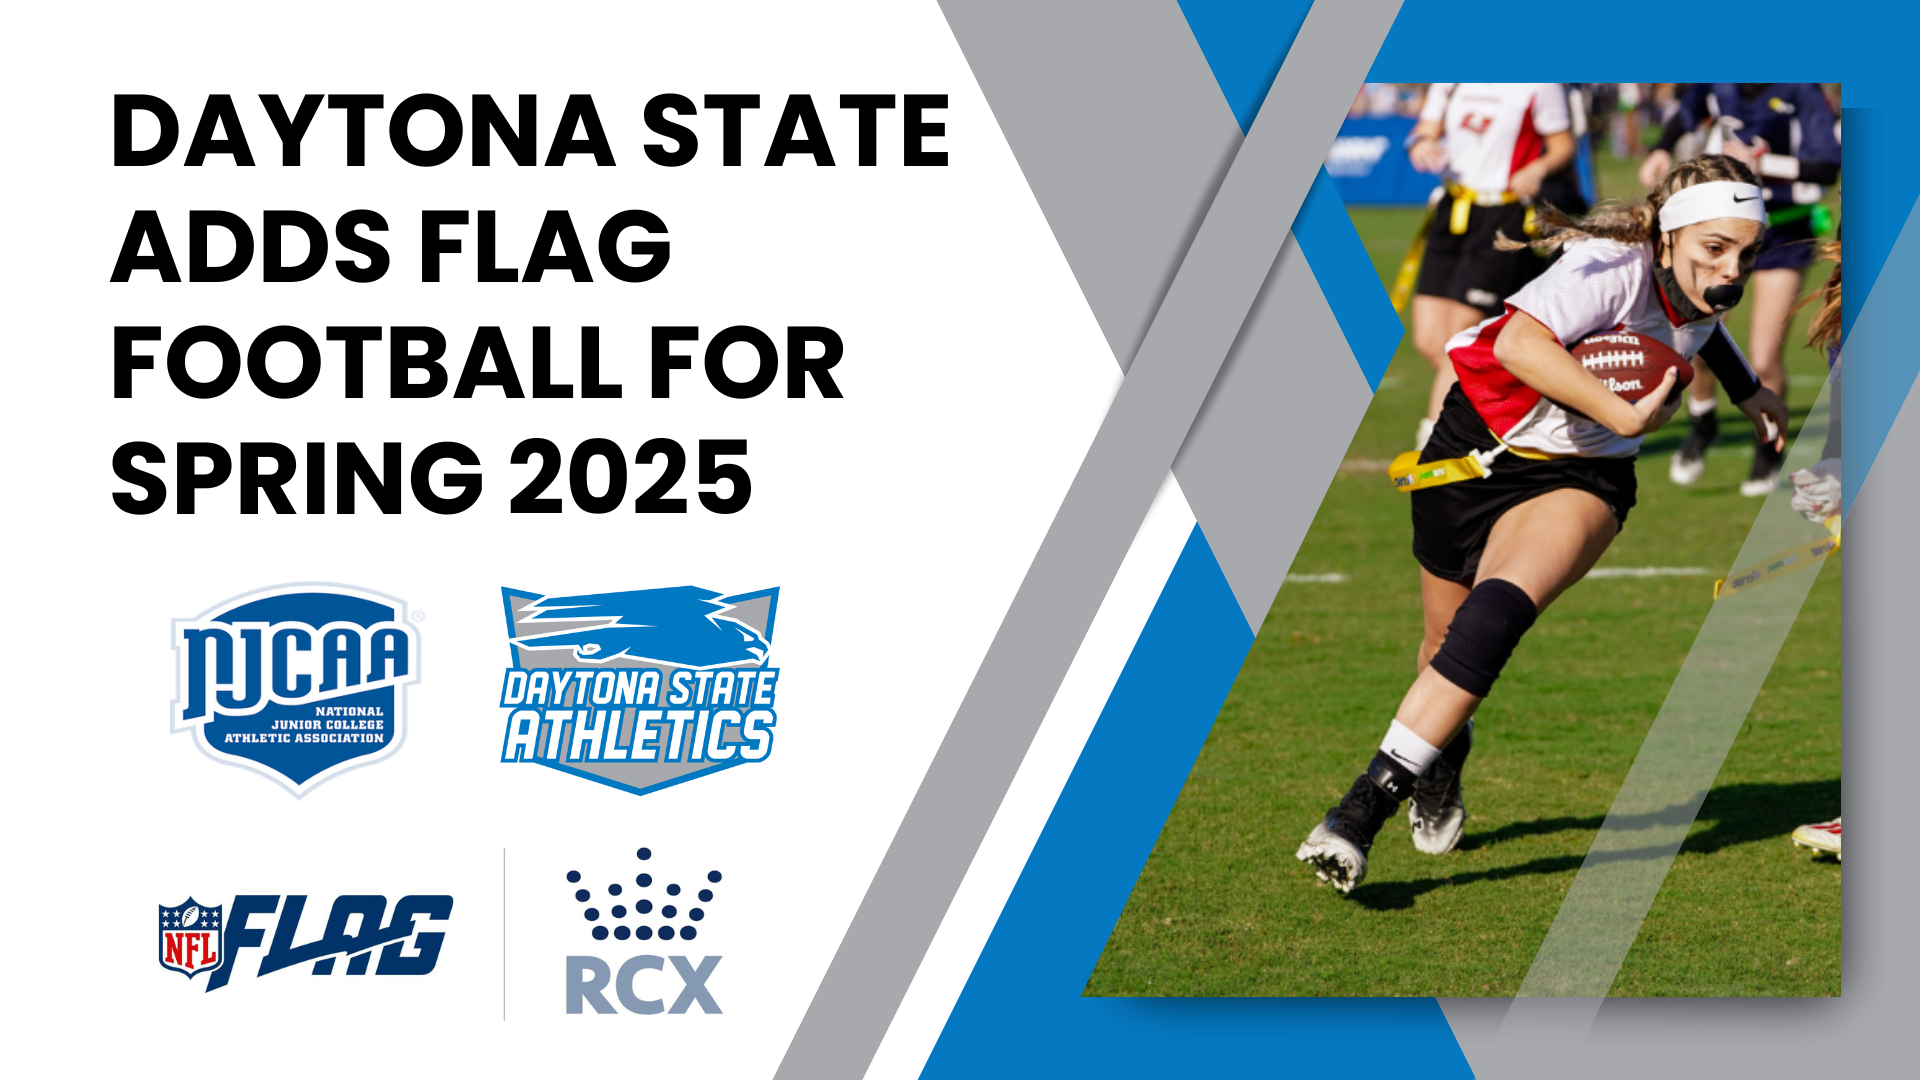 Daytona State College announces addition of women’s flag football as an intercollegiate sport